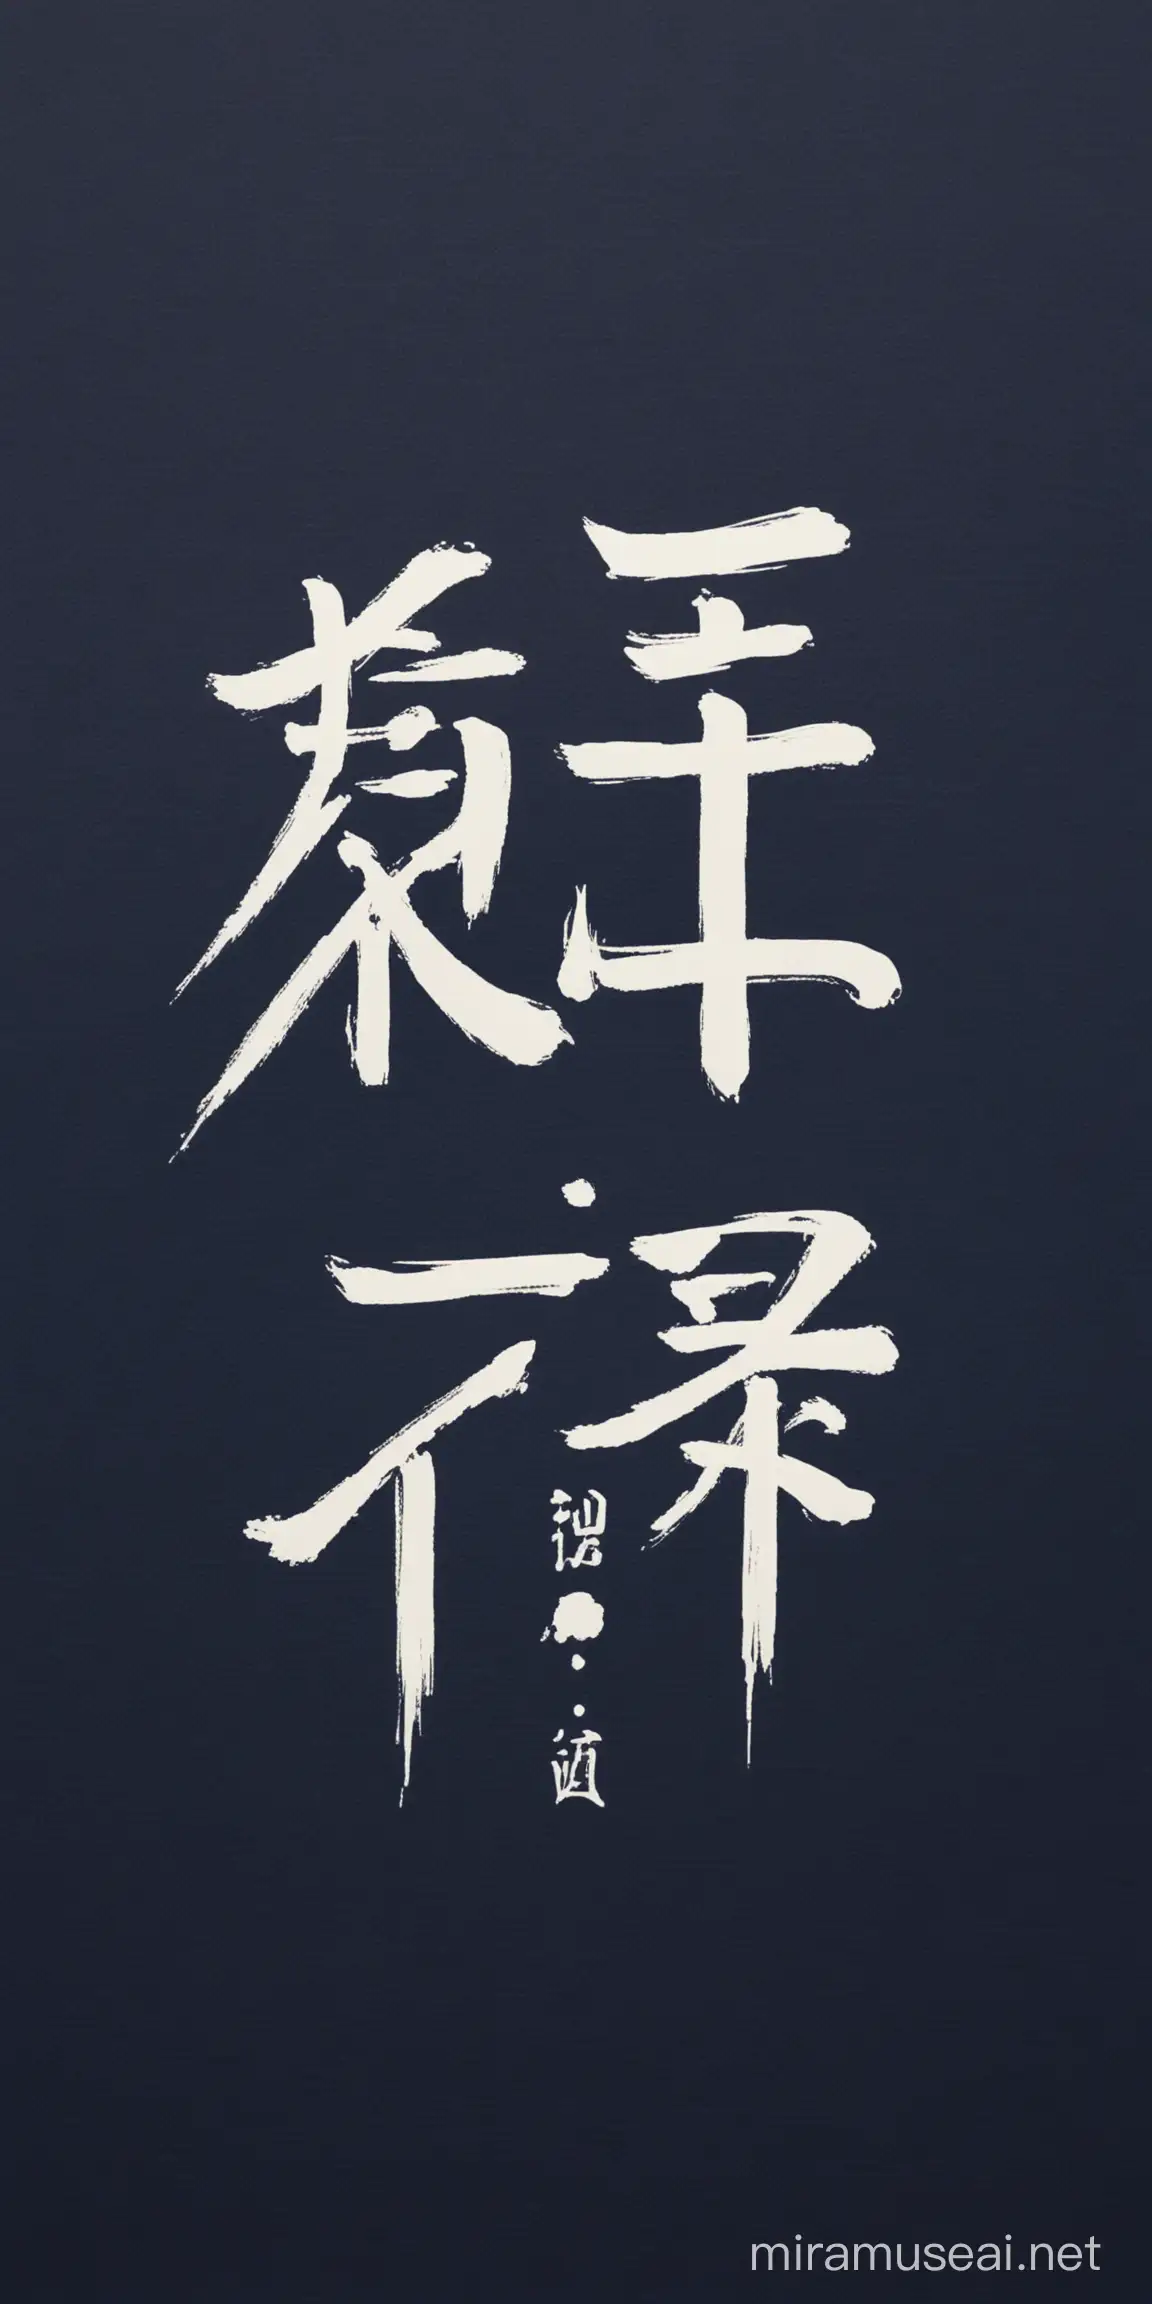 Japanese Lettering Qii on Dark Blue Background